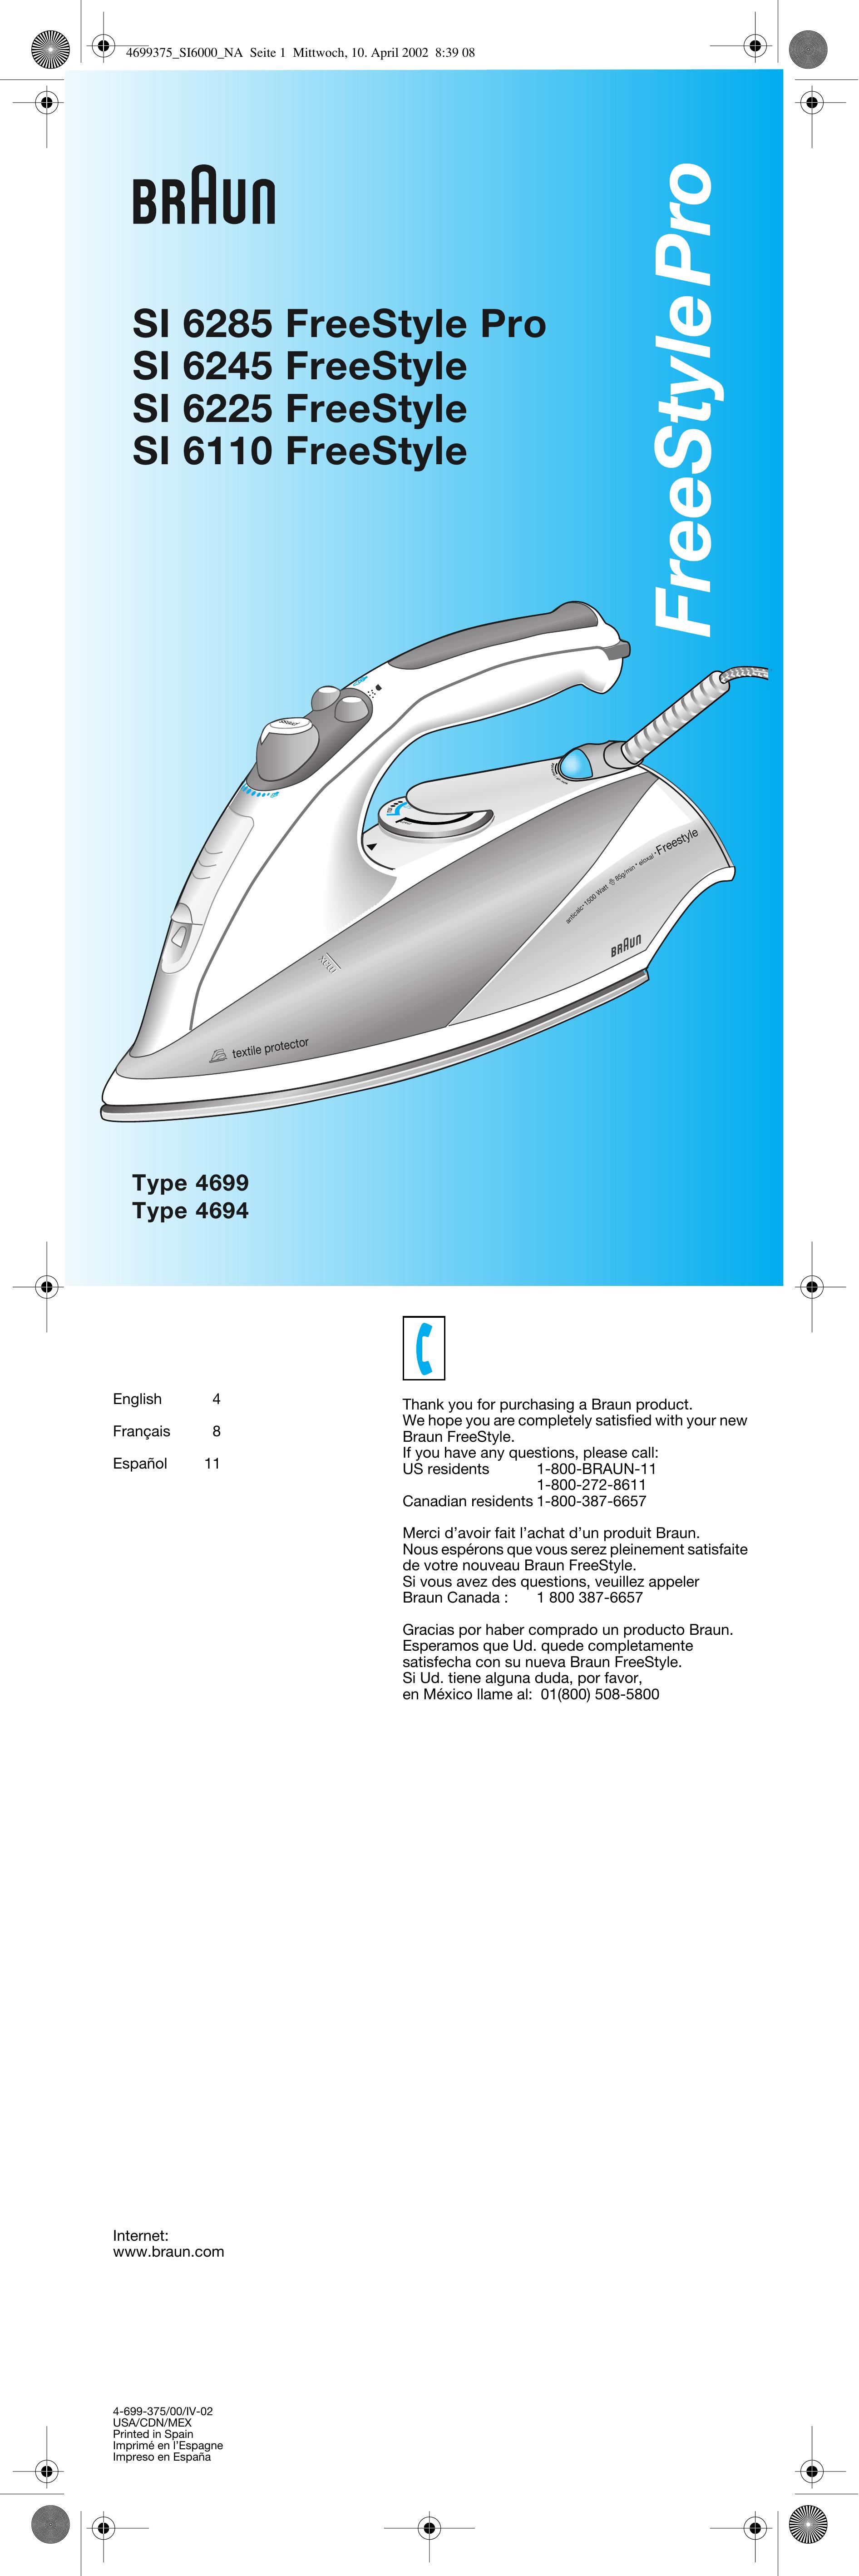 Braun 4699 Iron User Manual